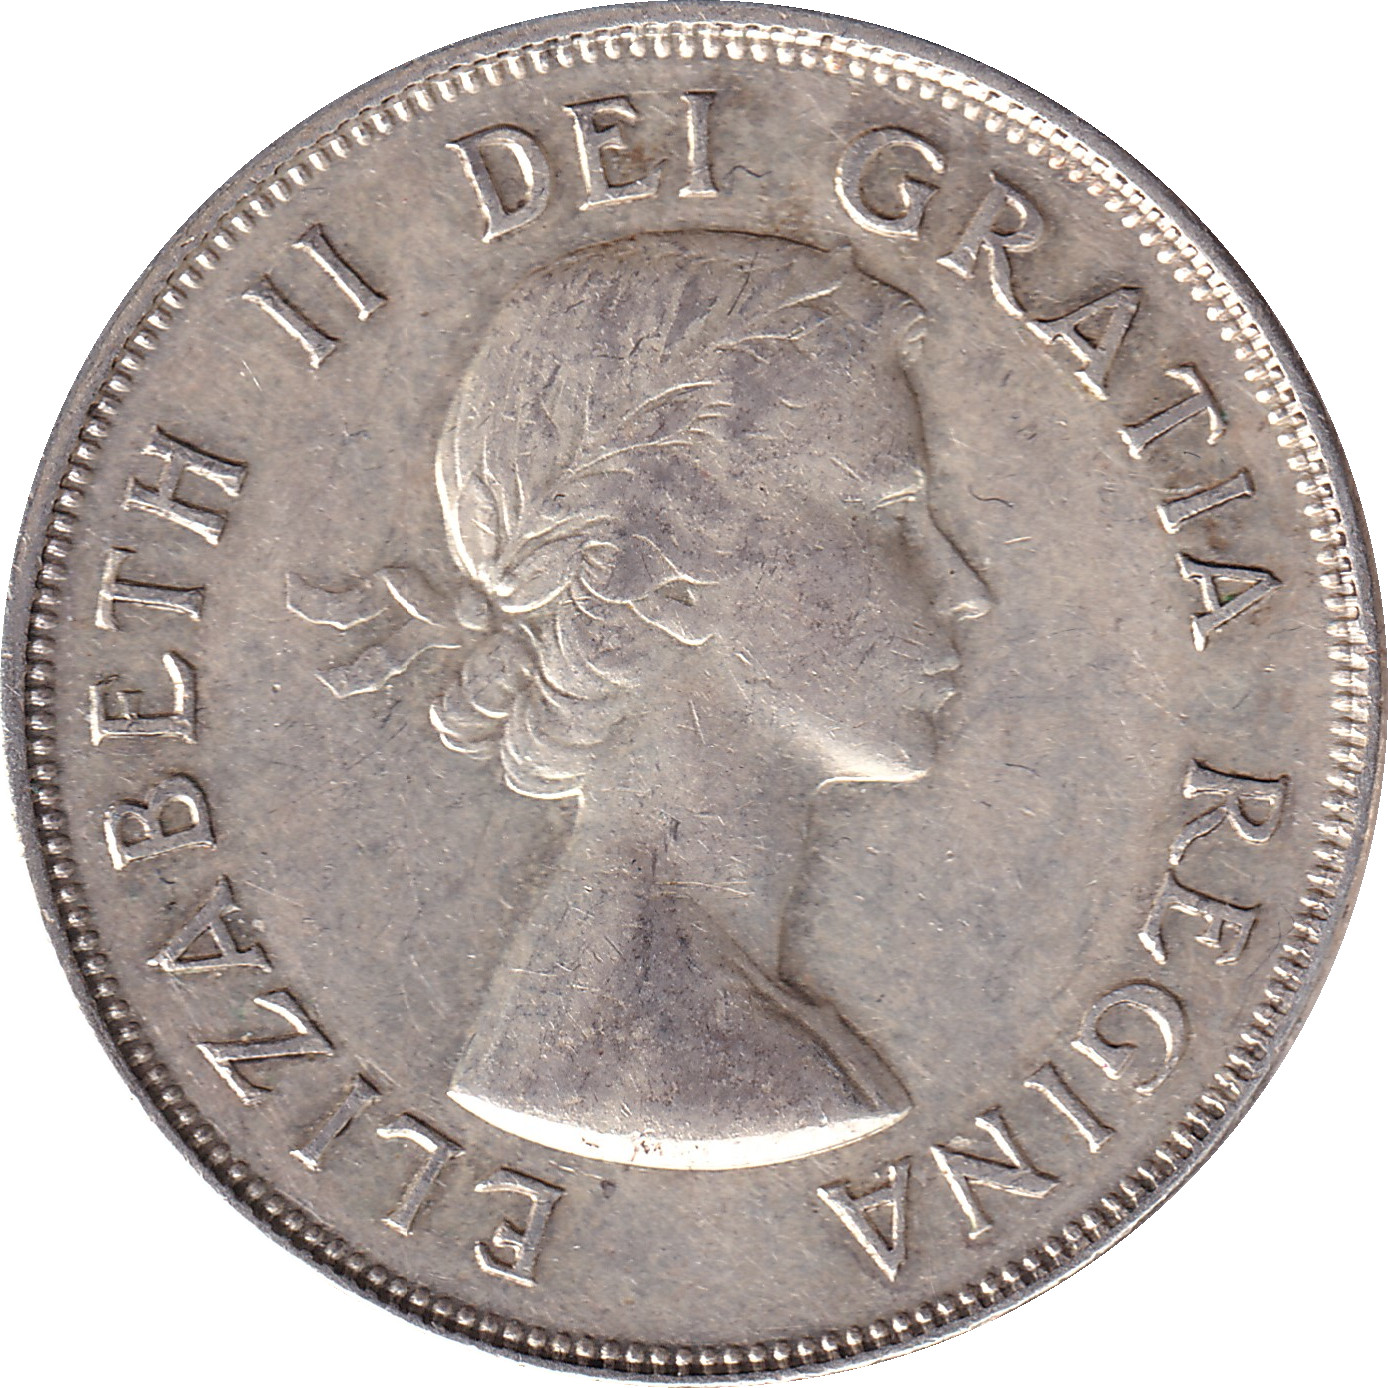 50 cents - Elizabeth II - Buste jeune - Grandes armoiries